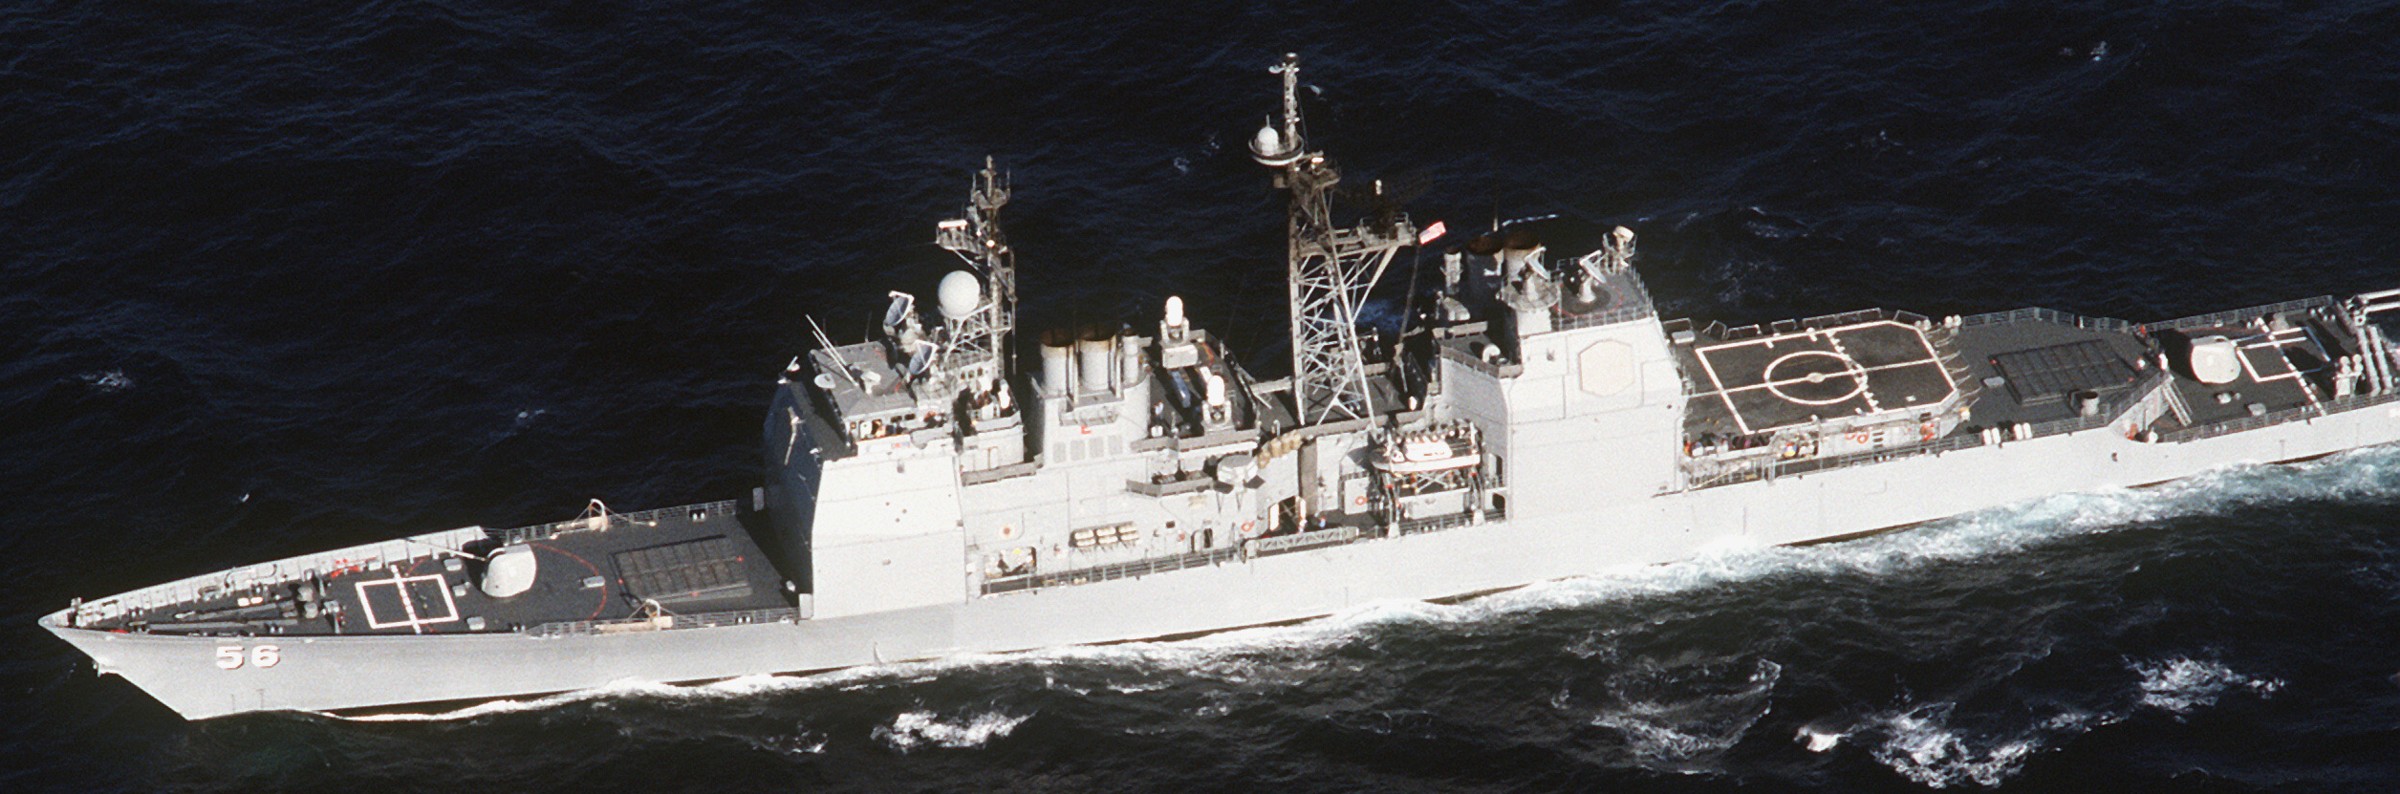 cg-56 uss san jacinto ticonderoga class guided missile cruiser aegis us navy desert storm 151